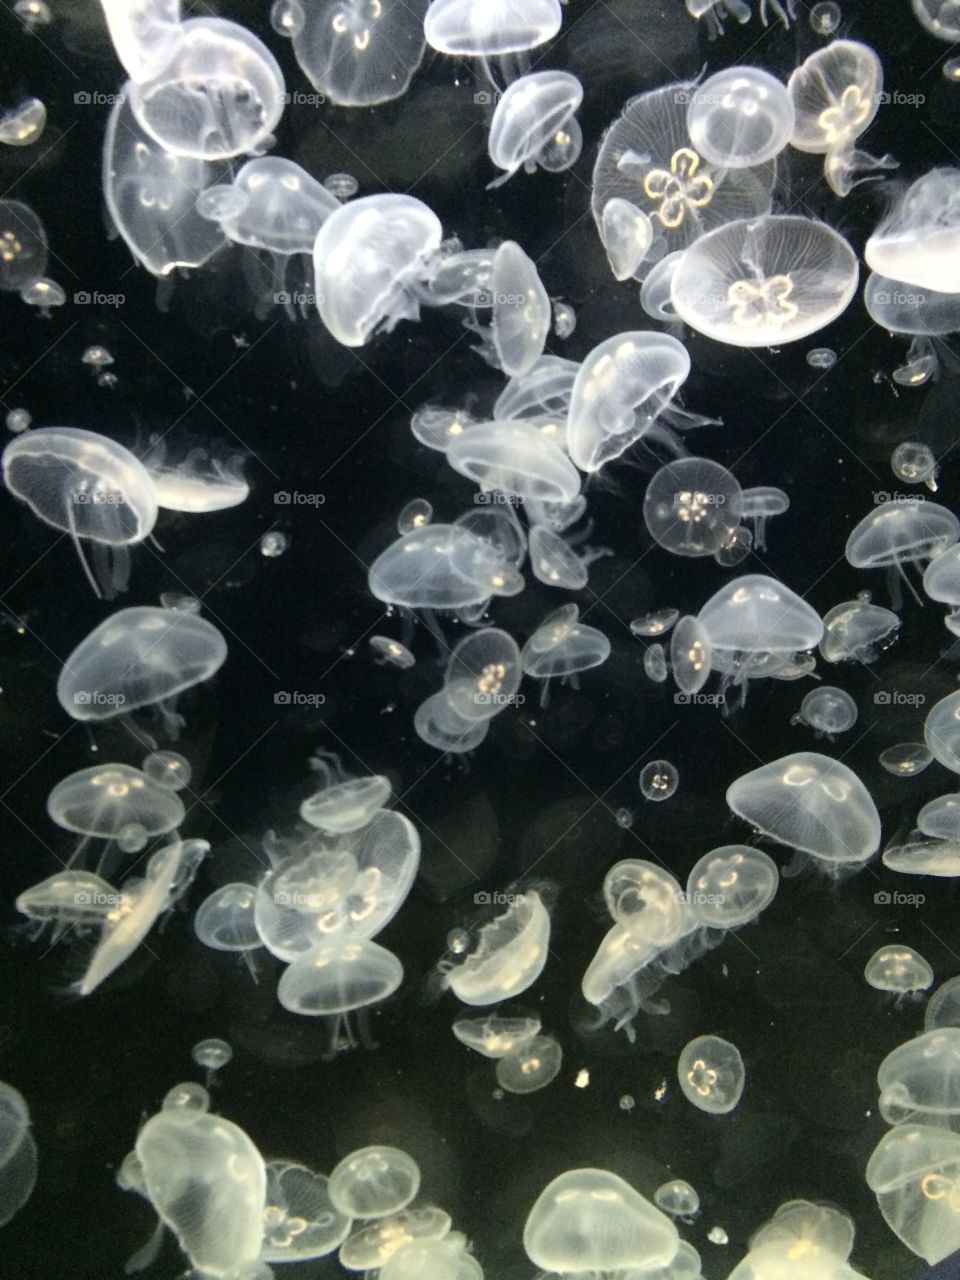 Jellyfish 1